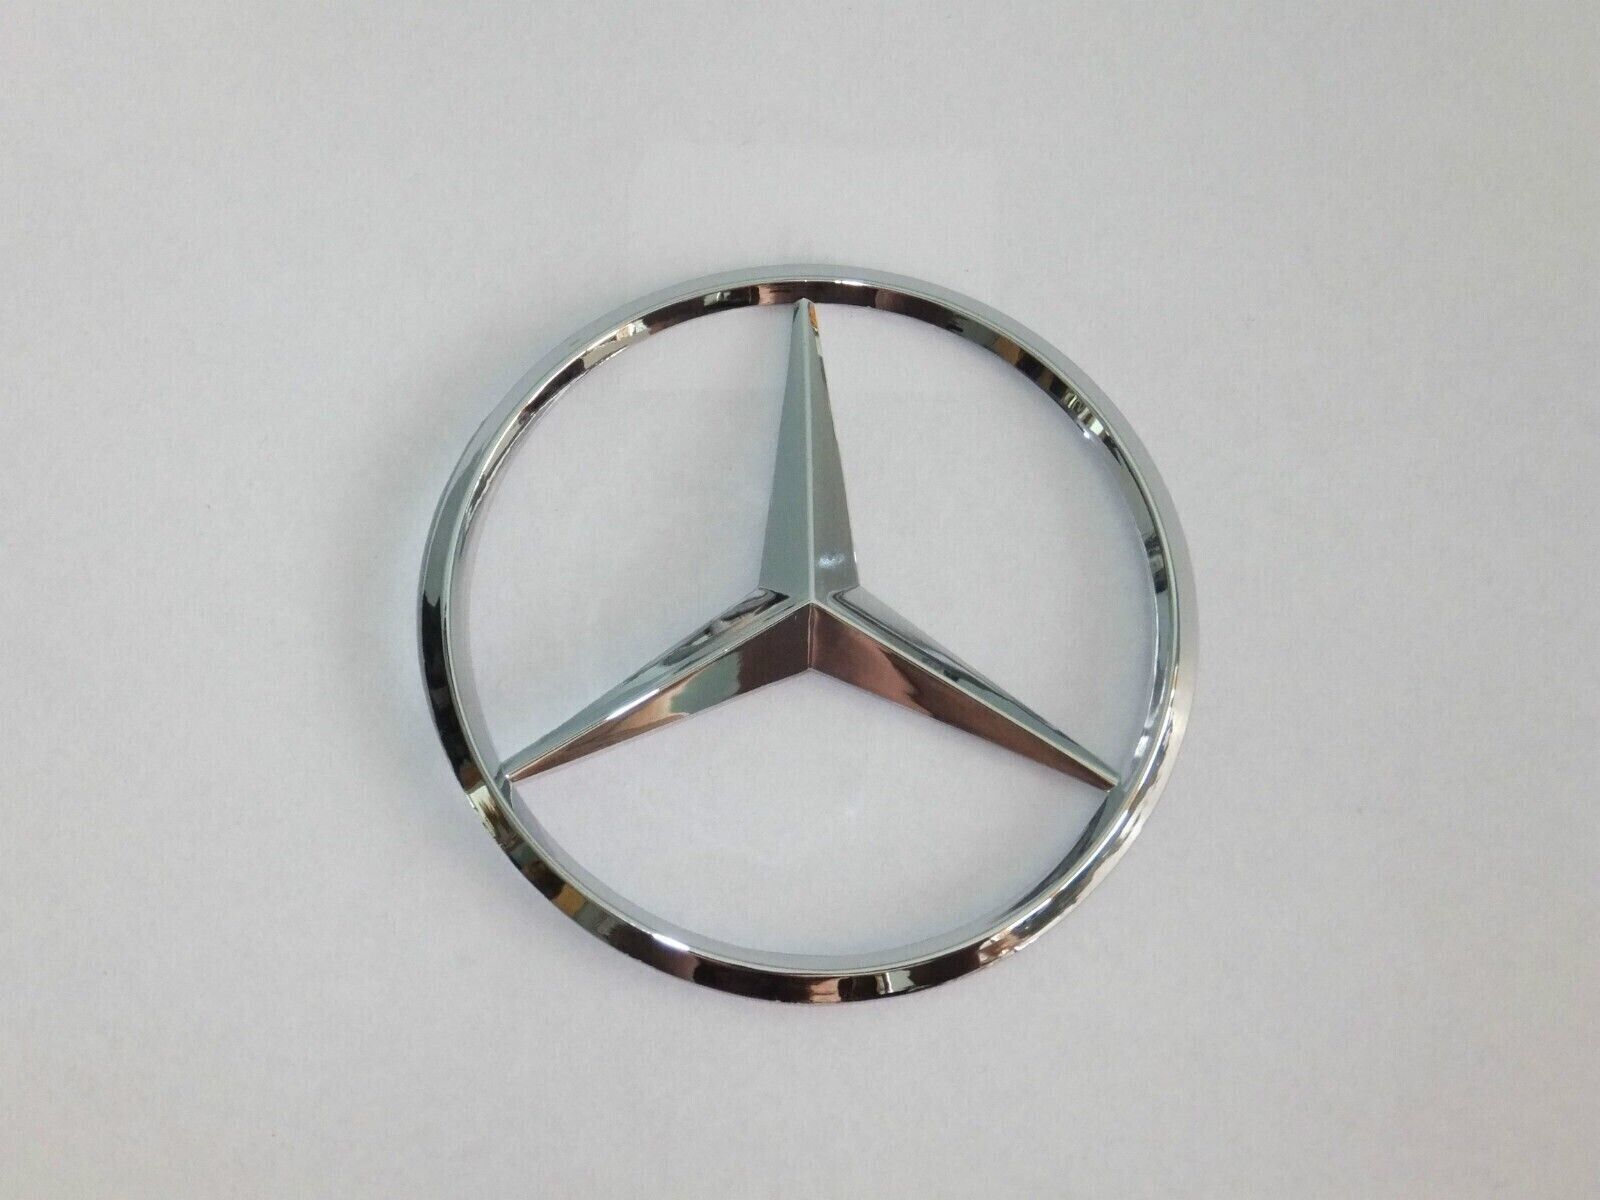 New for Mercedes Chrome Star Trunk Emblem Badge 90mm